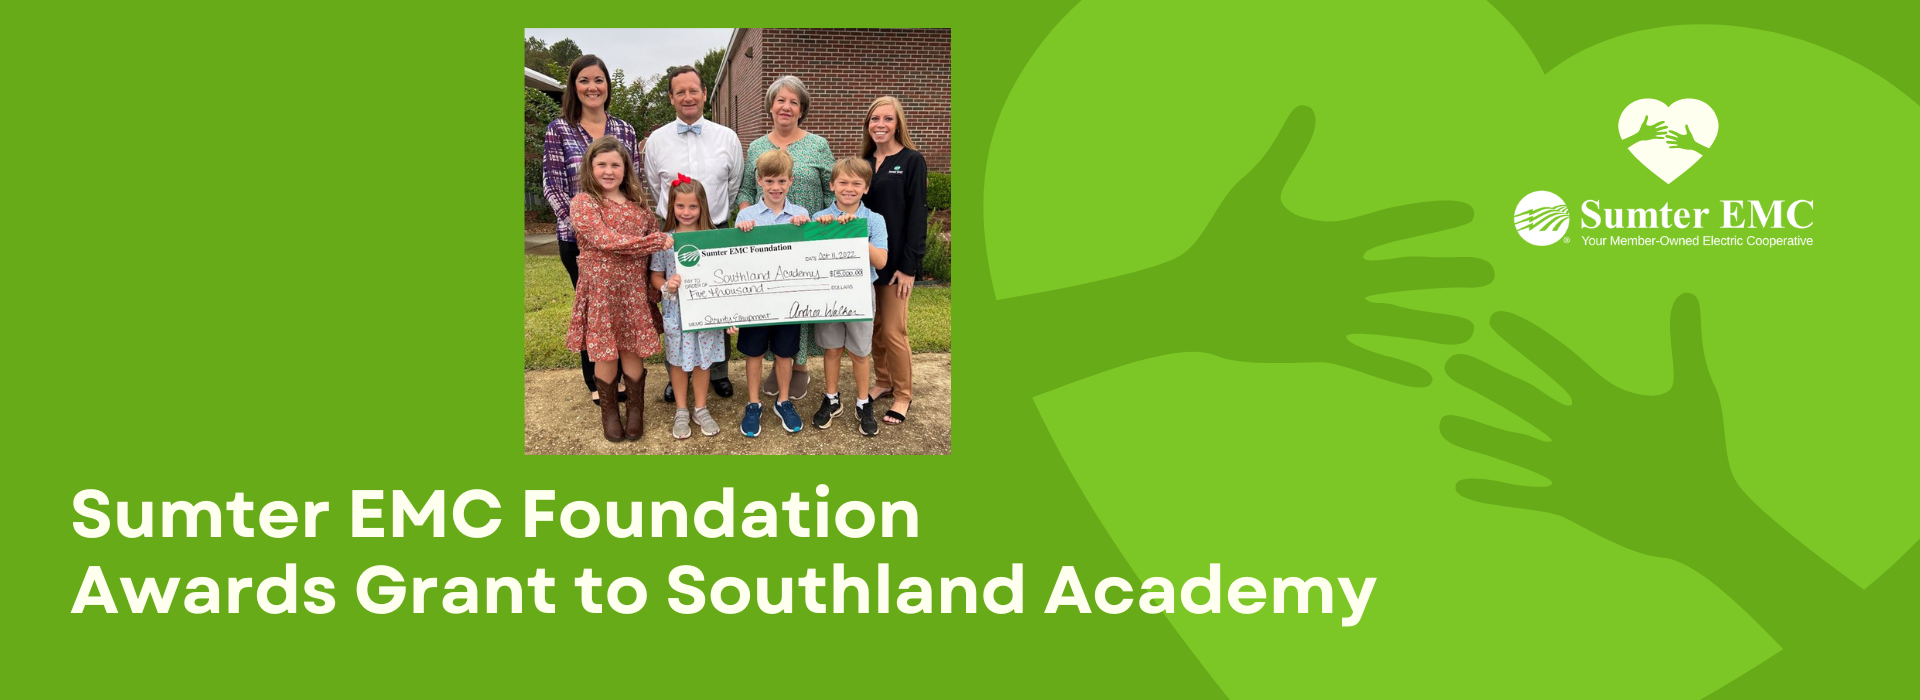 Sumter EMC Foundation Awards Grant to Southland Academy